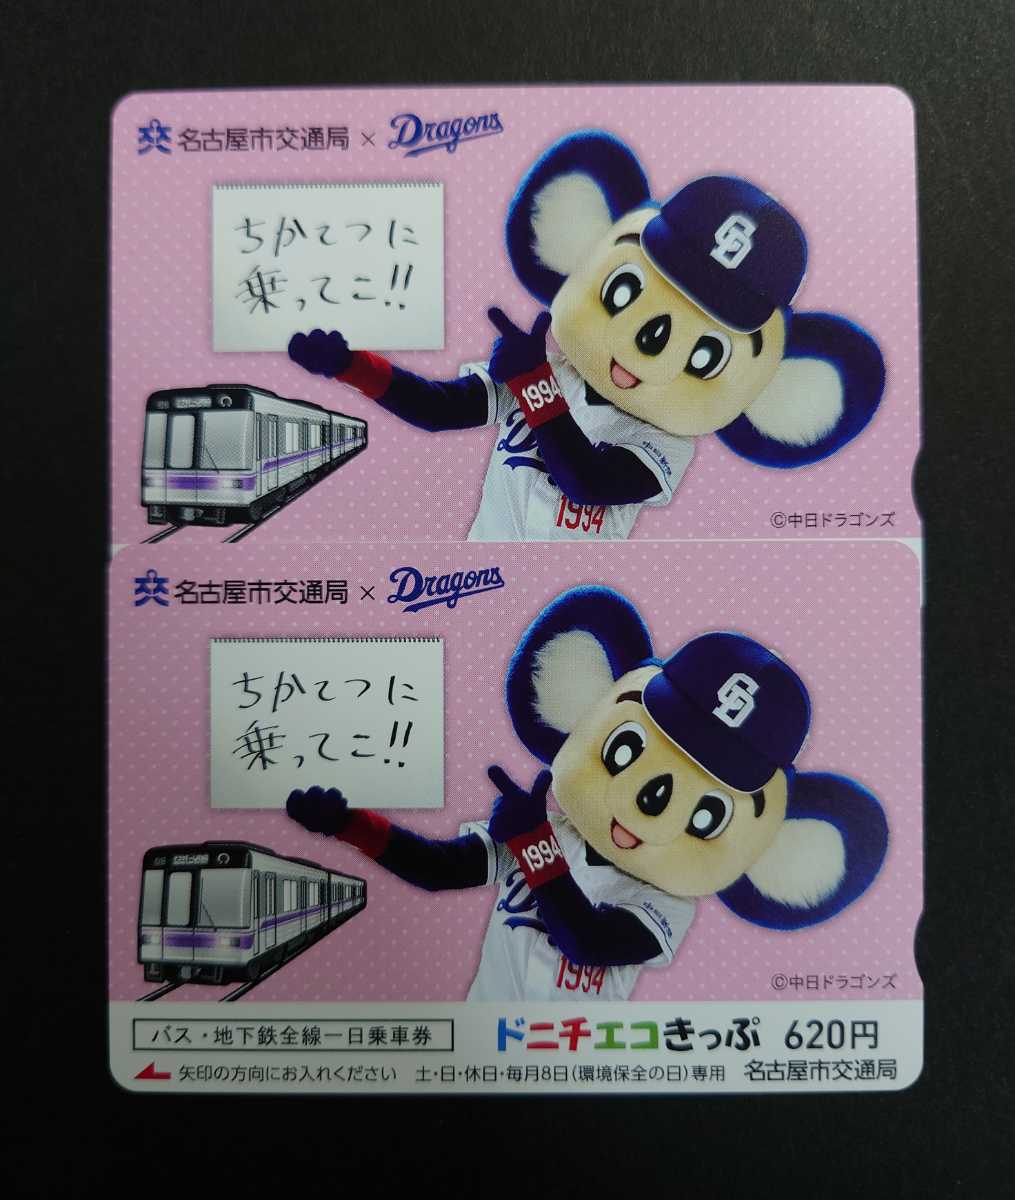  Nagoya city traffic department *2 sheets [....... lever!! door la. donichi eko tickets ] Chunichi Dragons * new goods unused 